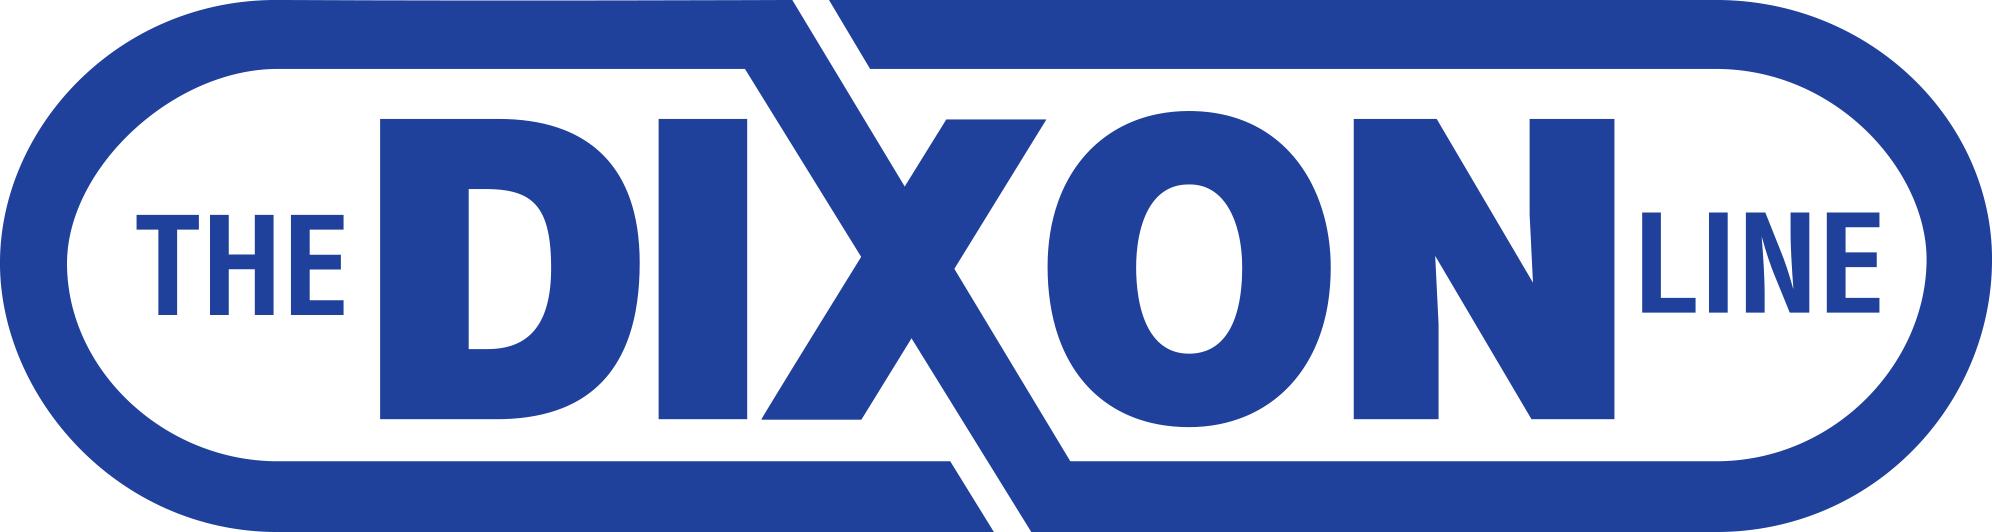 The Dixon Line Logo